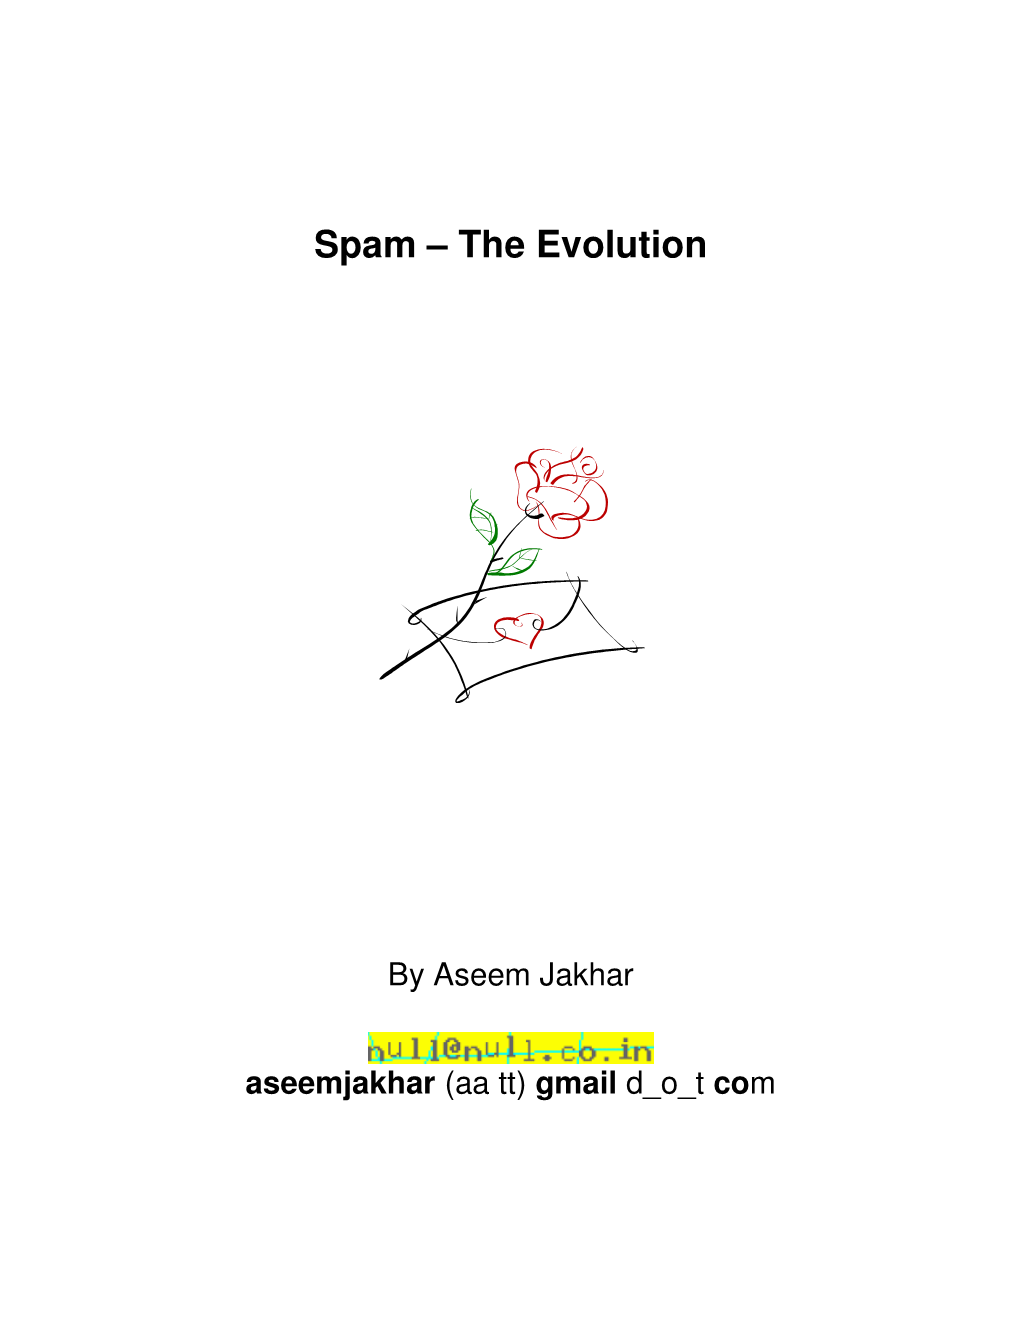 Spam – the Evolution